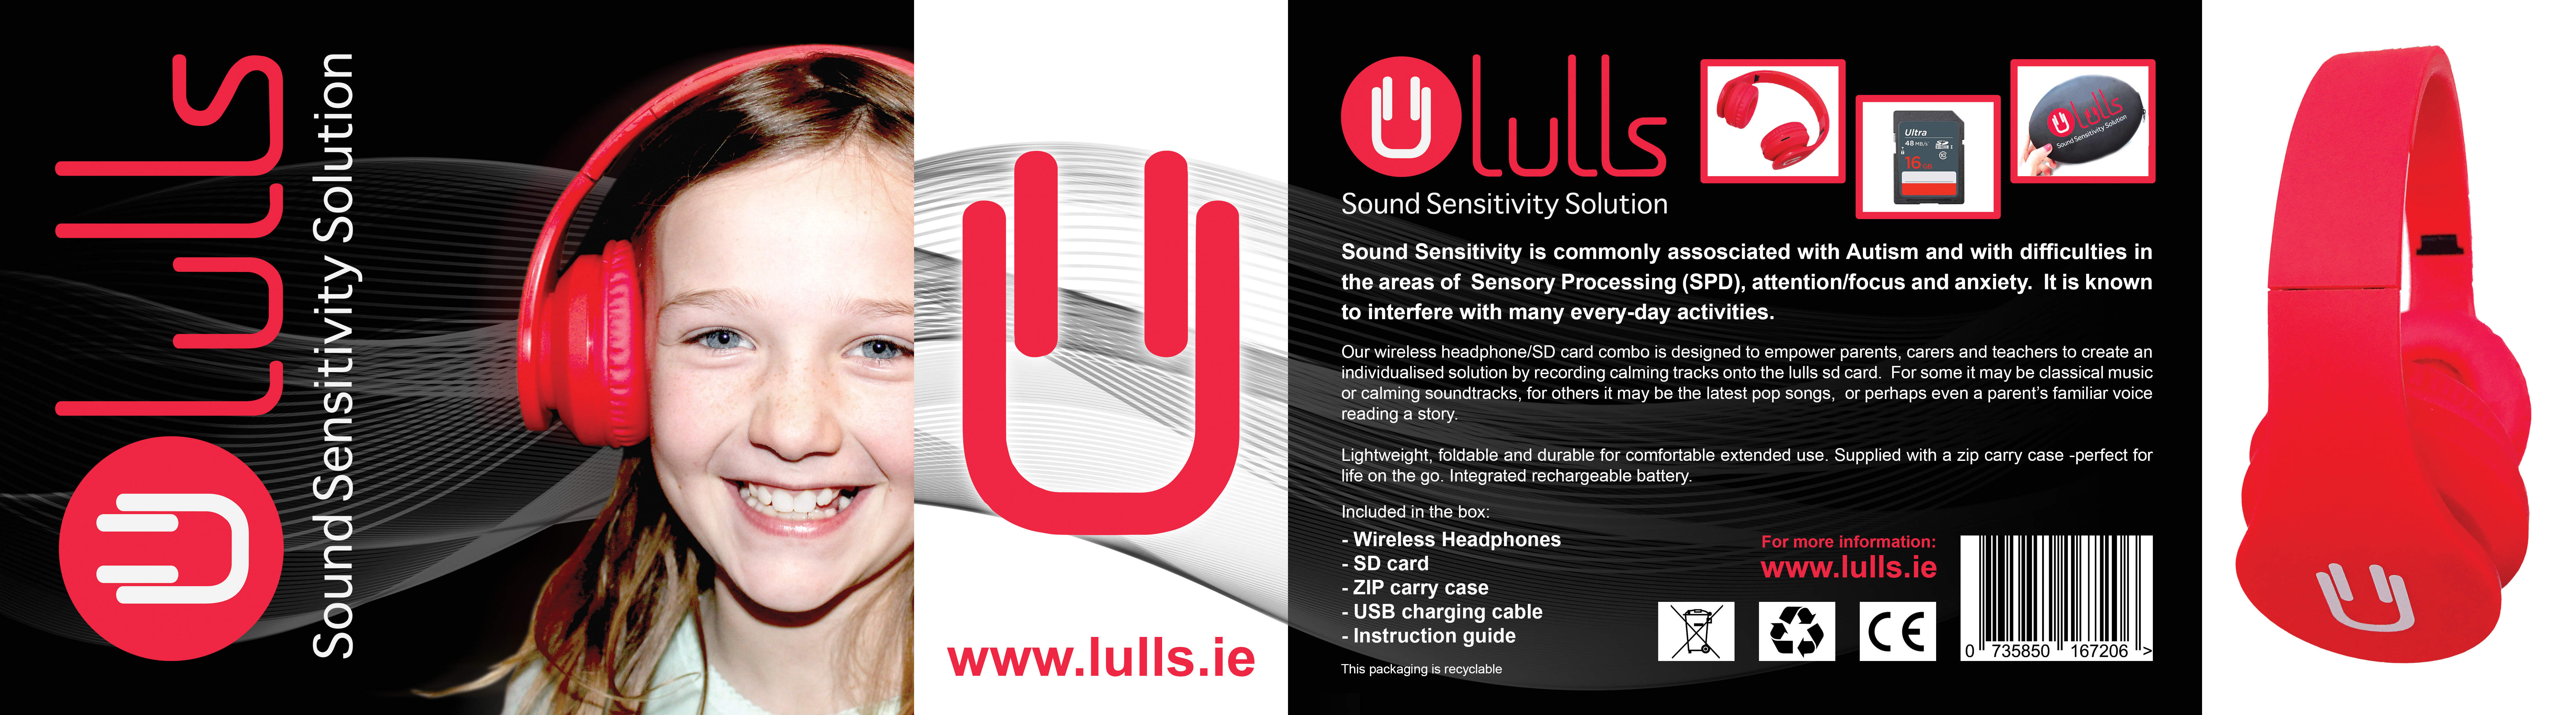 Lulls Sound Sensitivity Solution